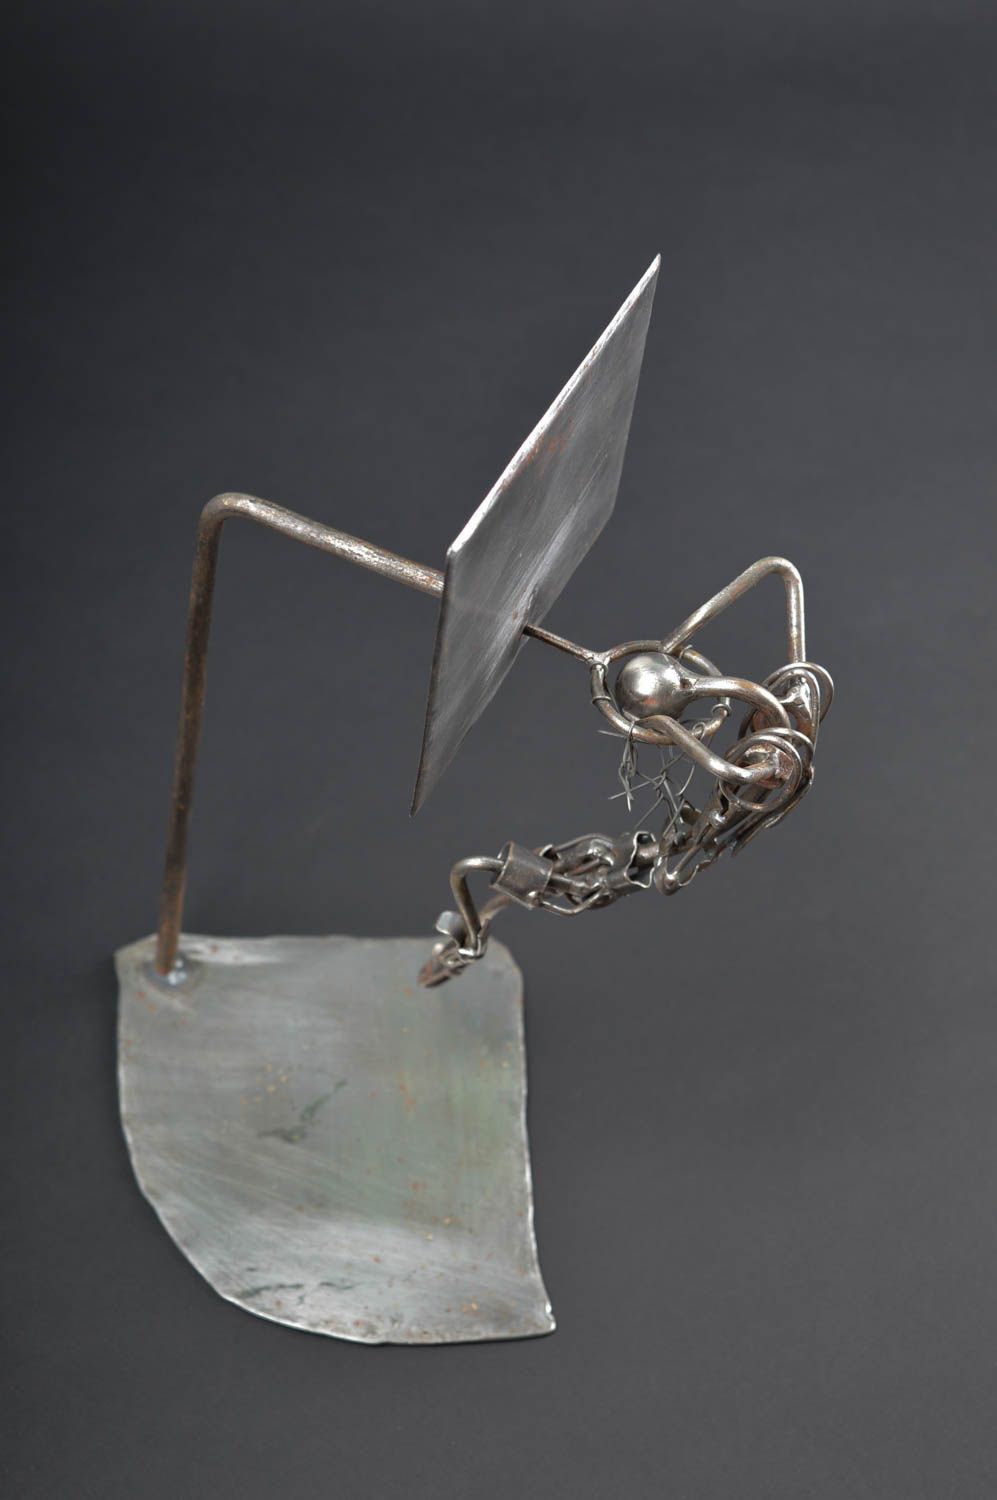 Unusual handmade metal figurine contemporary art metal craft decorative use only photo 1